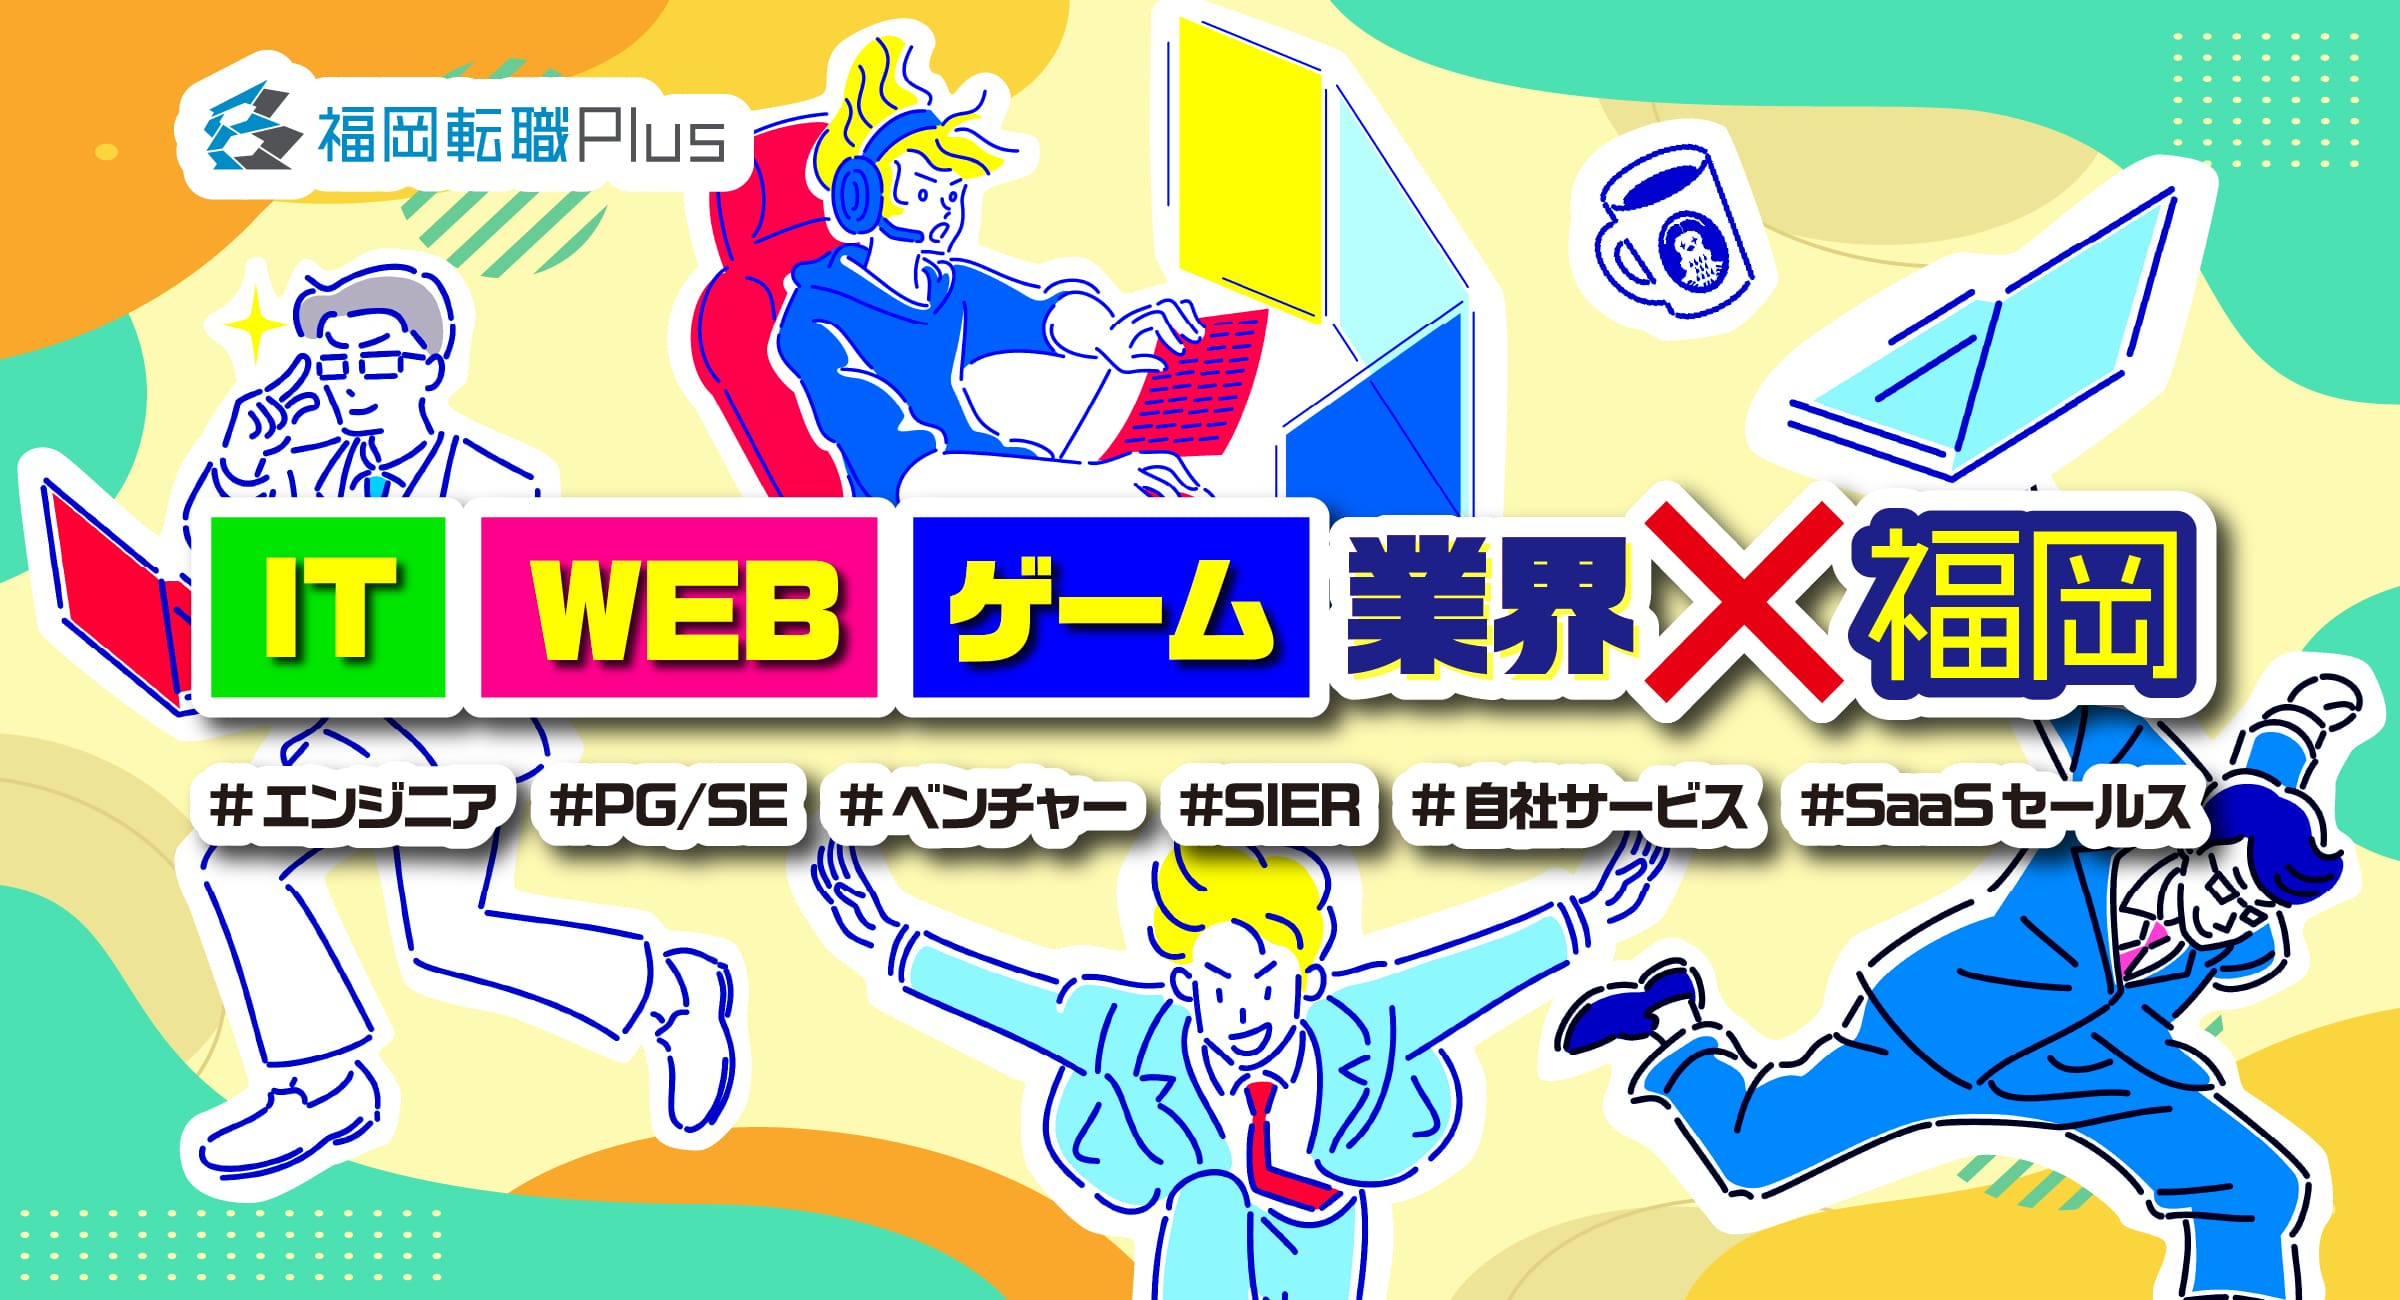 IT&WEB&ゲーム業界×福岡　スタートアップ、ベッチャー、SIER、自社サービス、SaaSセールスなどの求人紹介